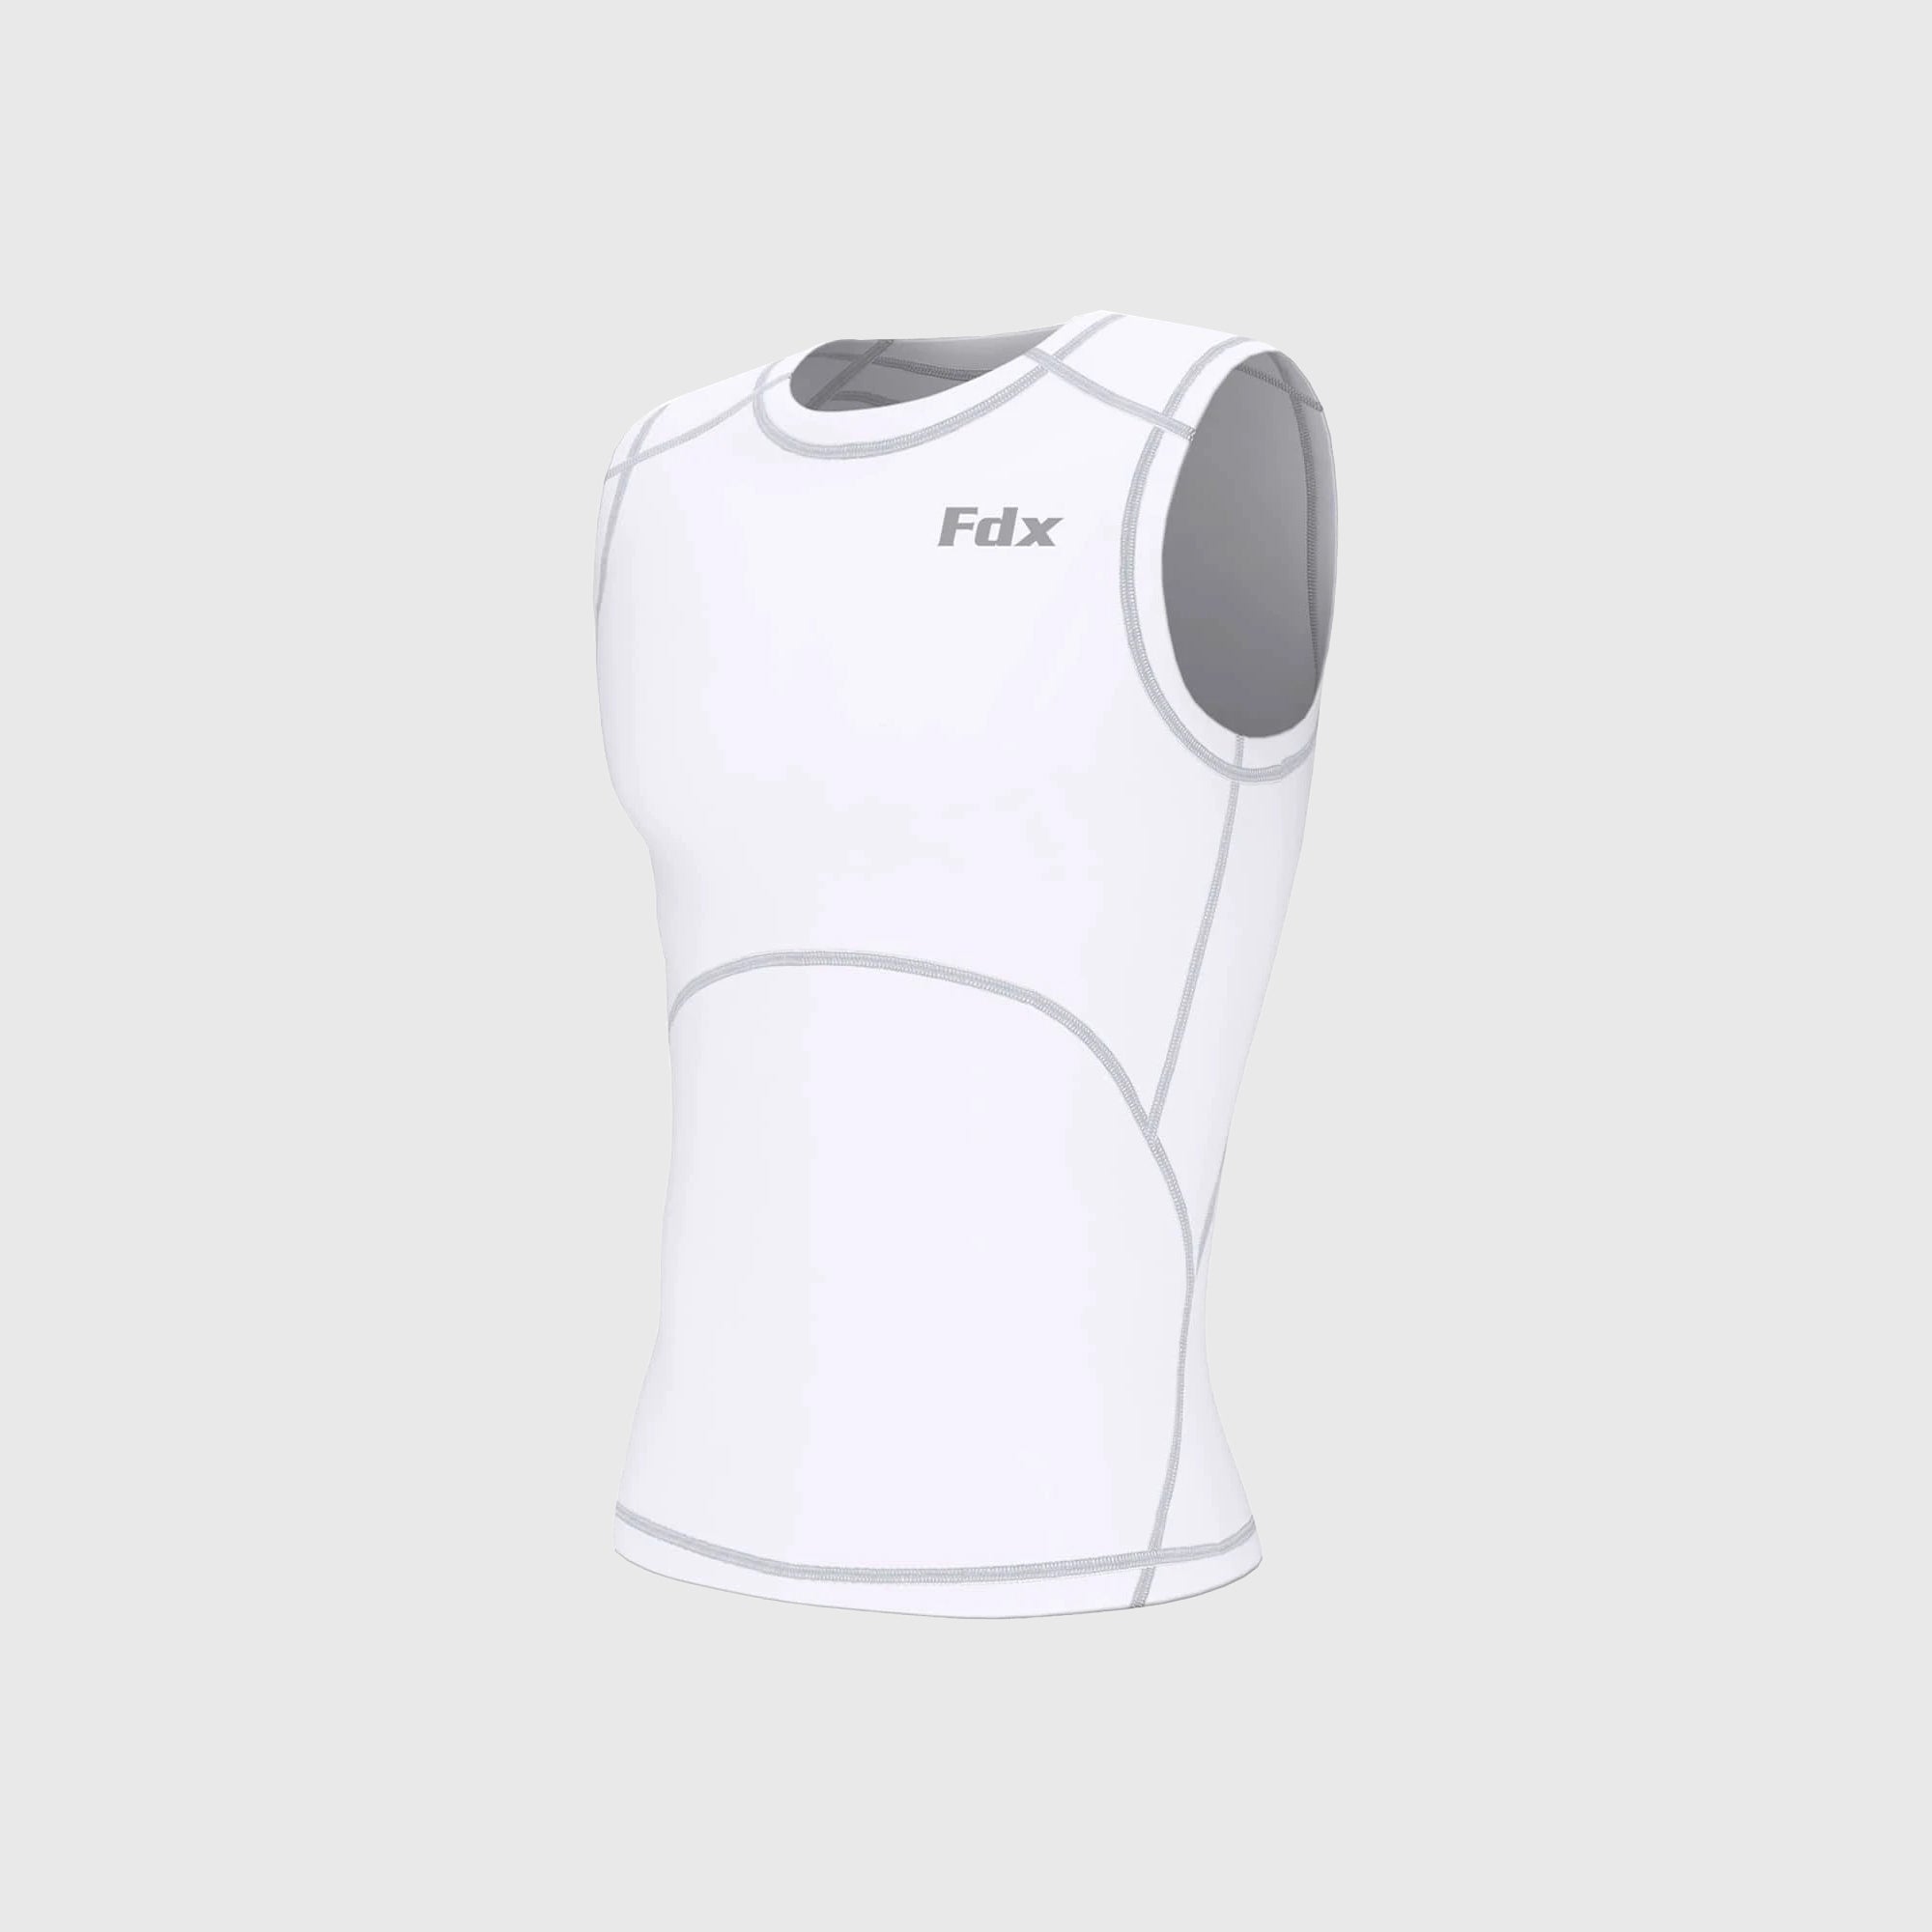 Fdx Mens White Sleeveless Compression Top Running Gym Workout Wear Rash Guard Stretchable Breathable Baselayer Shirt  - Aeroform